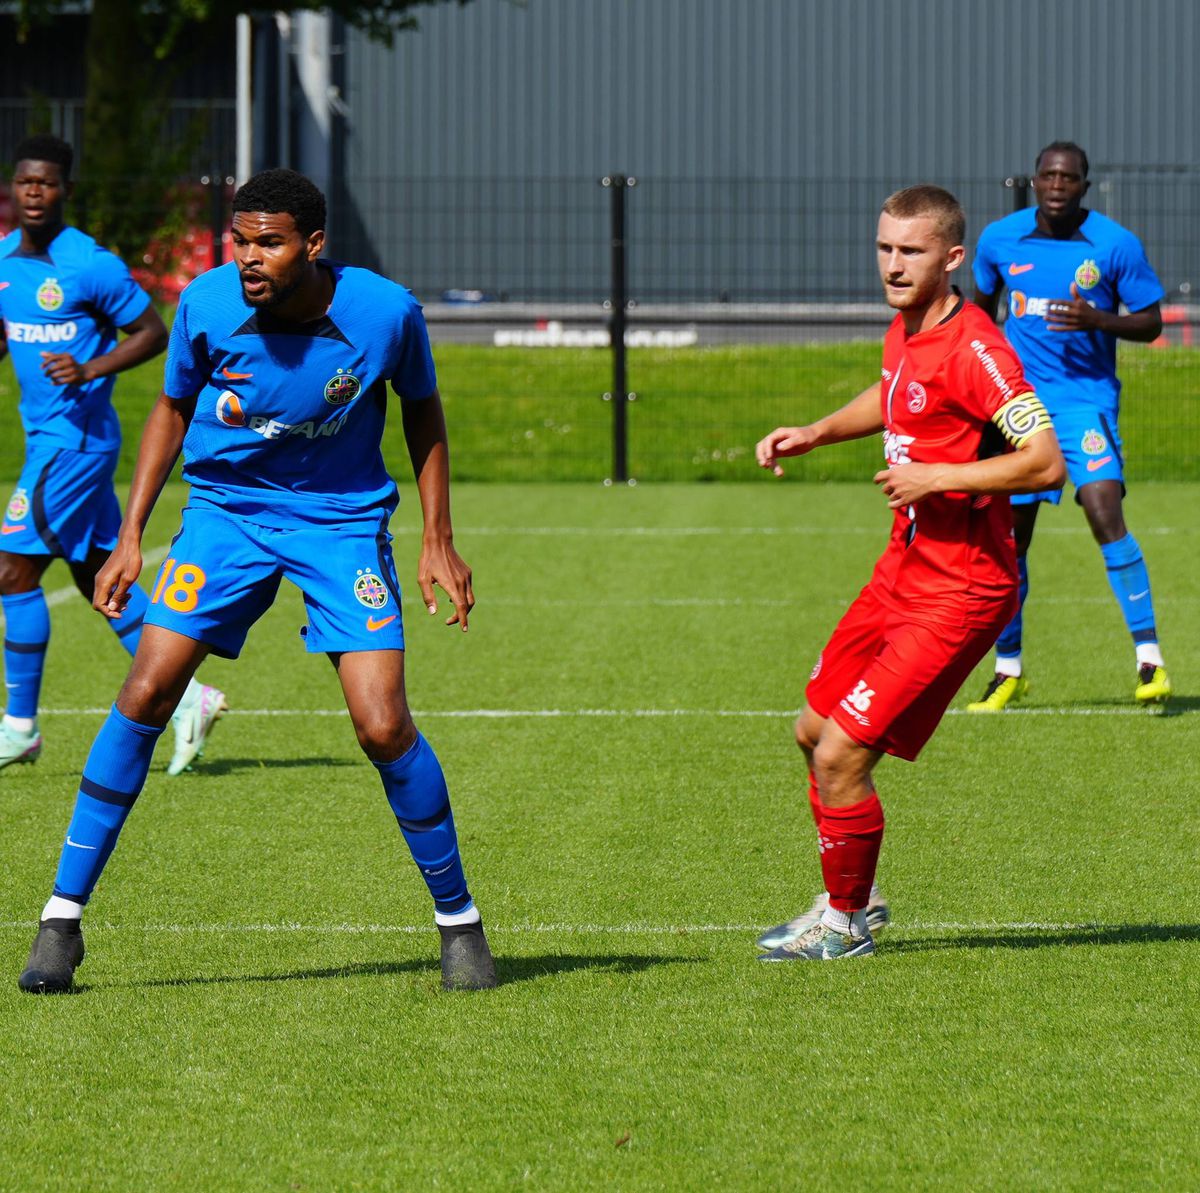 FCSB, victorie în amicalul cu Almere City